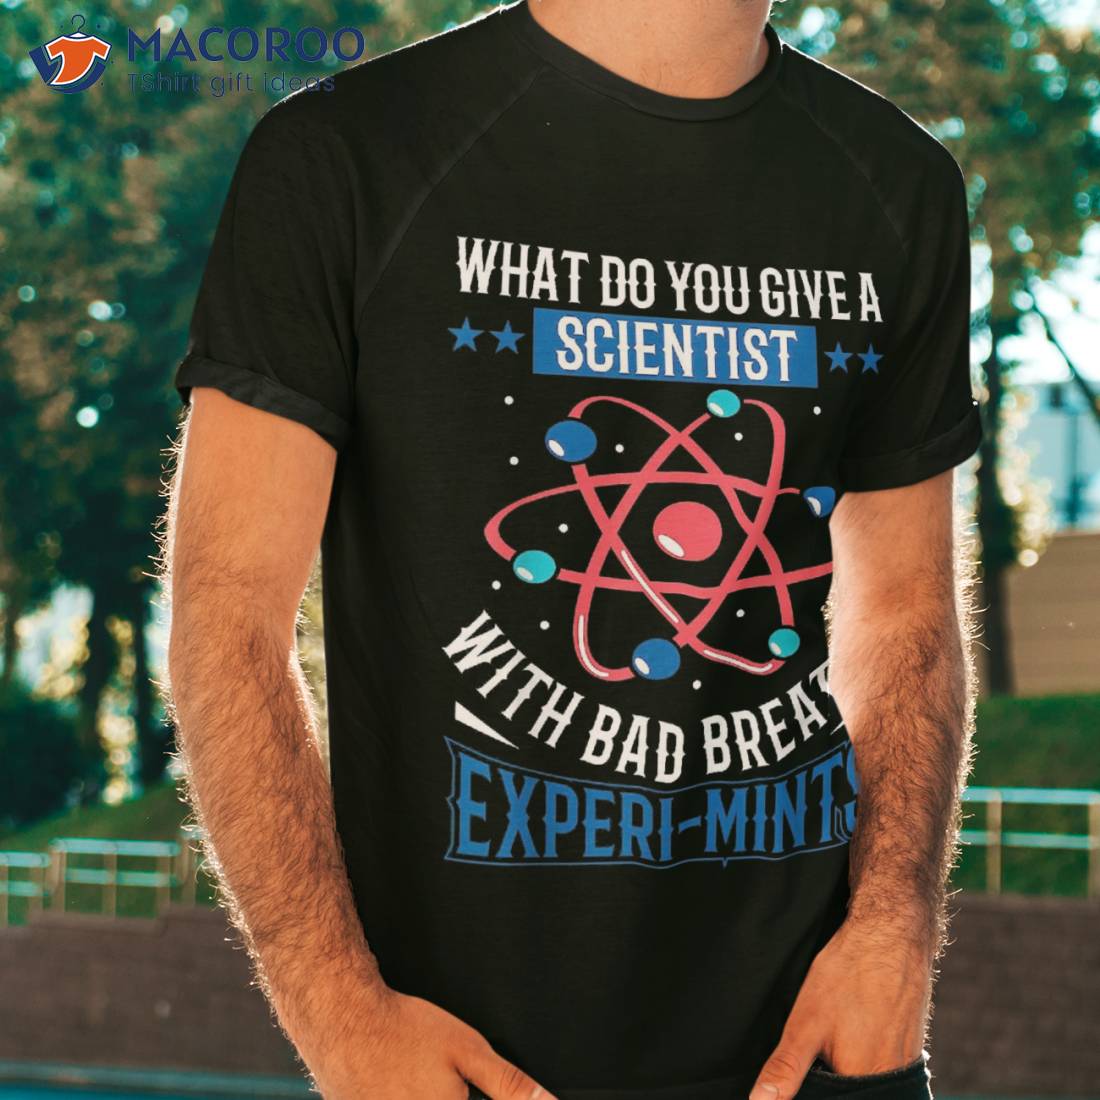 https://images.macoroo.com/wp-content/uploads/2023/06/funny-dad-shirts-for-scientist-shirt-joke-gifts-shirt-tshirt.jpg